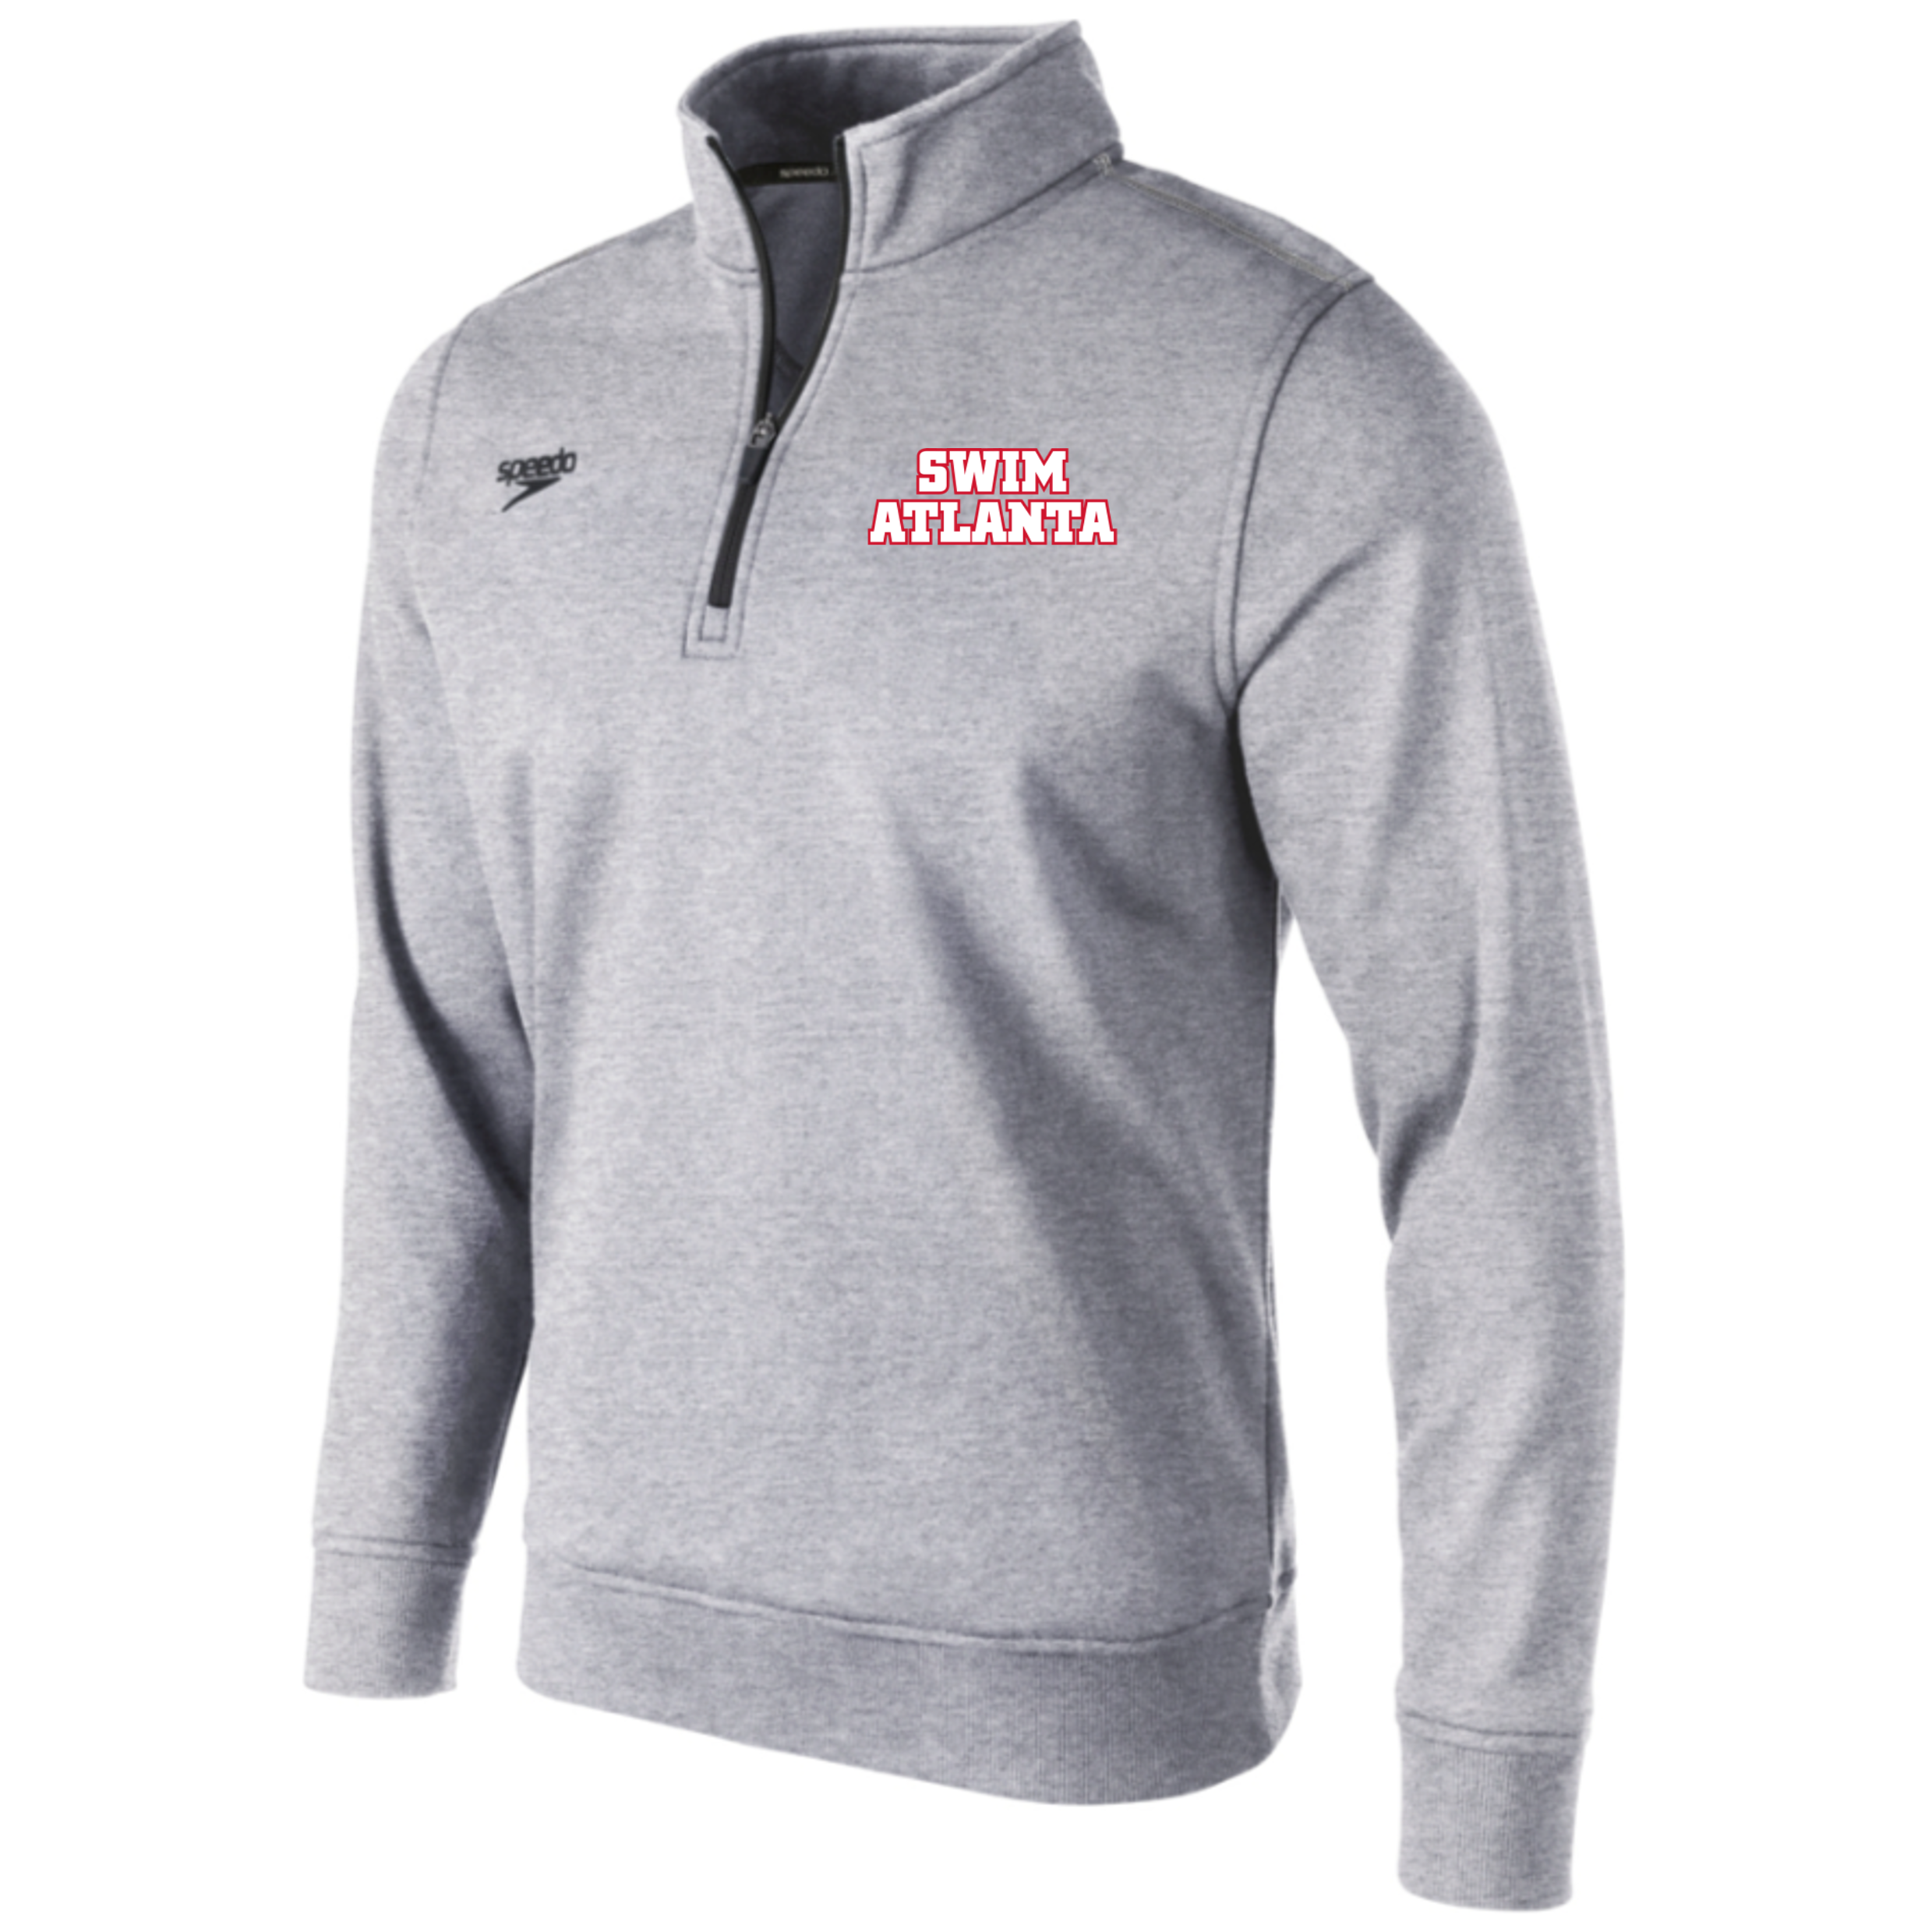 Speedo 1/4 Zip Fleece Sweatshirt #2 (Customized) - Swim Atlanta